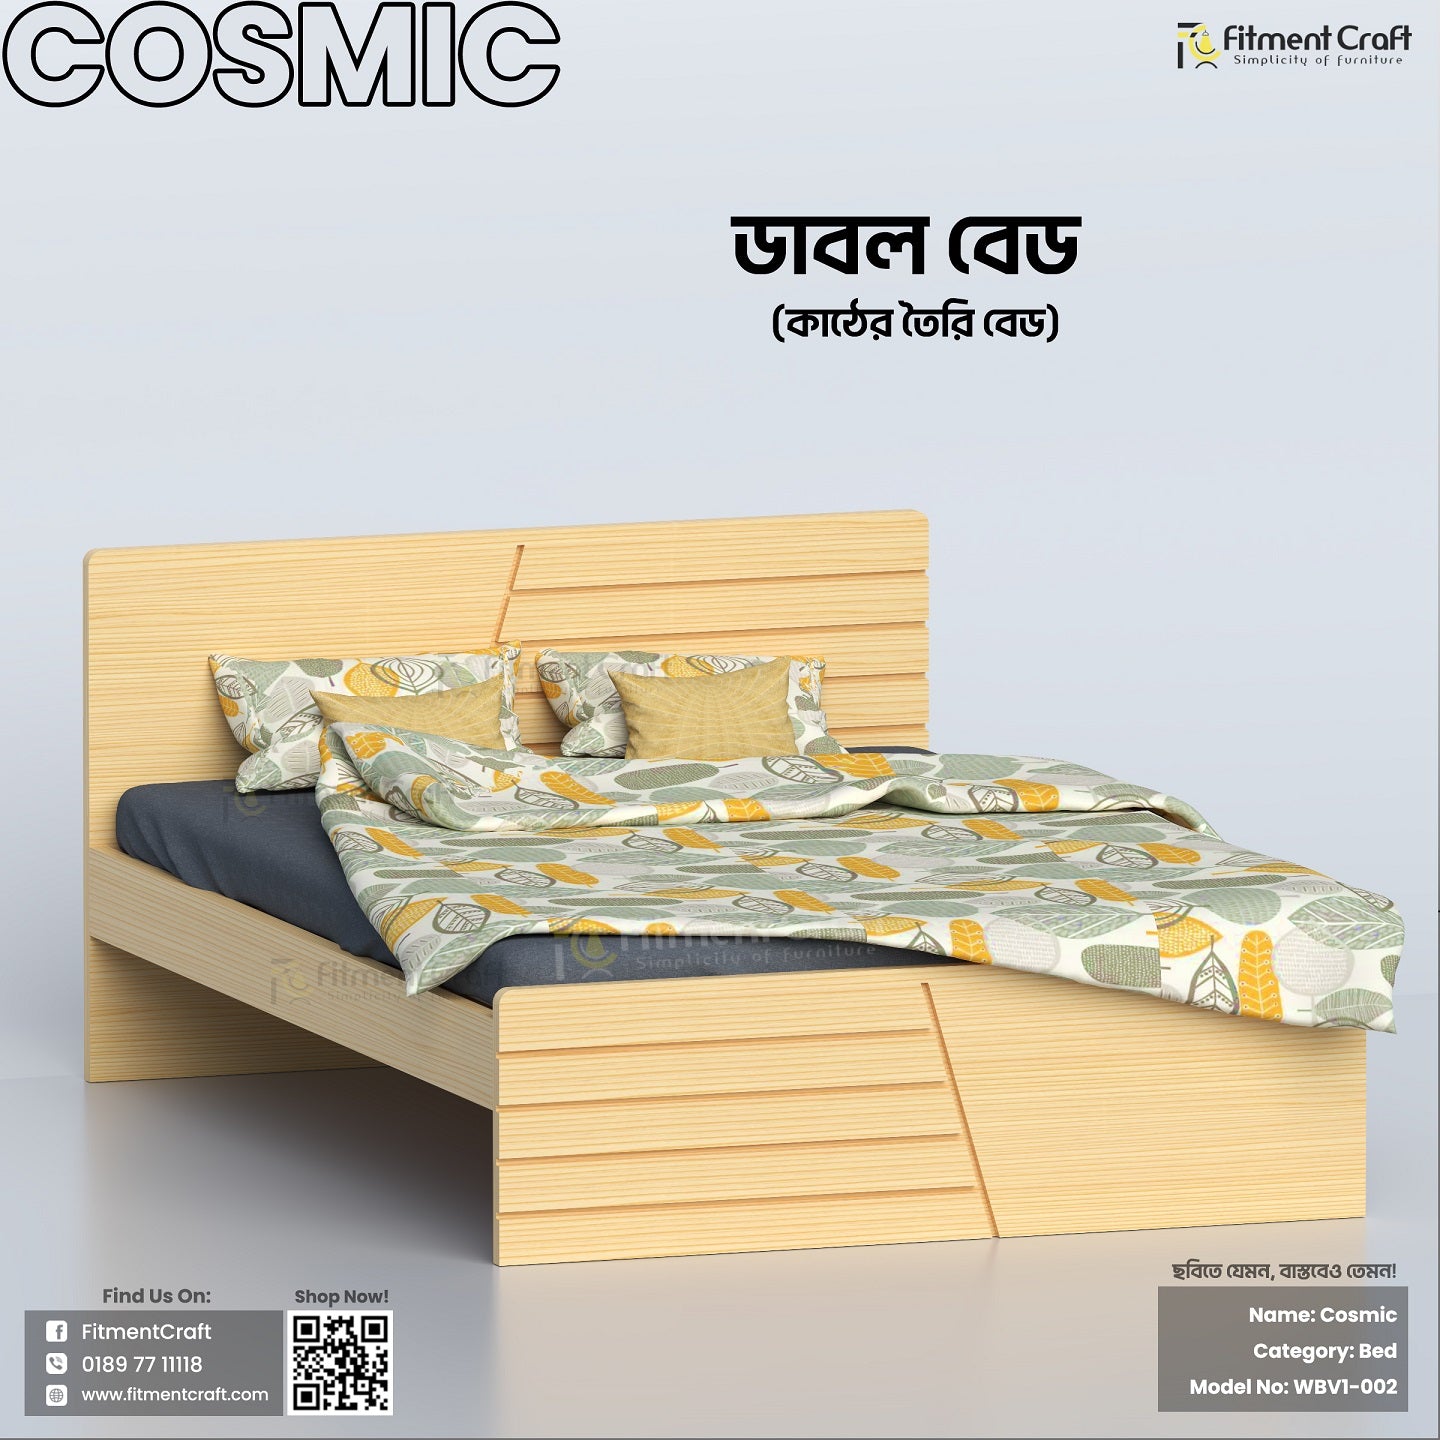 Cosmic Bed | WBV1-002